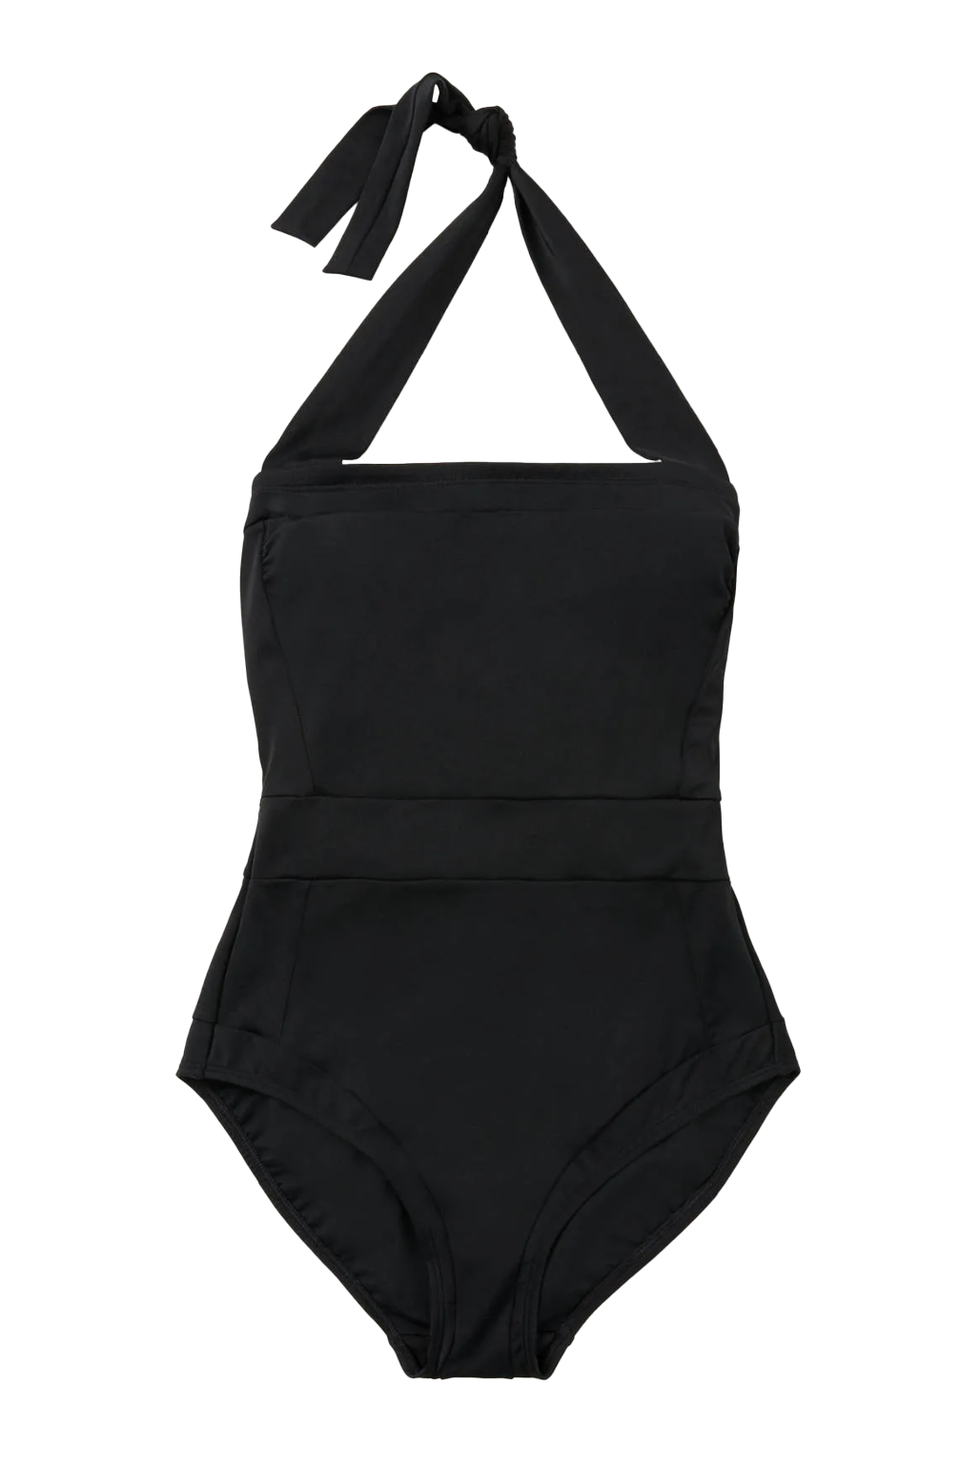 Santorini Black Swimsuit 